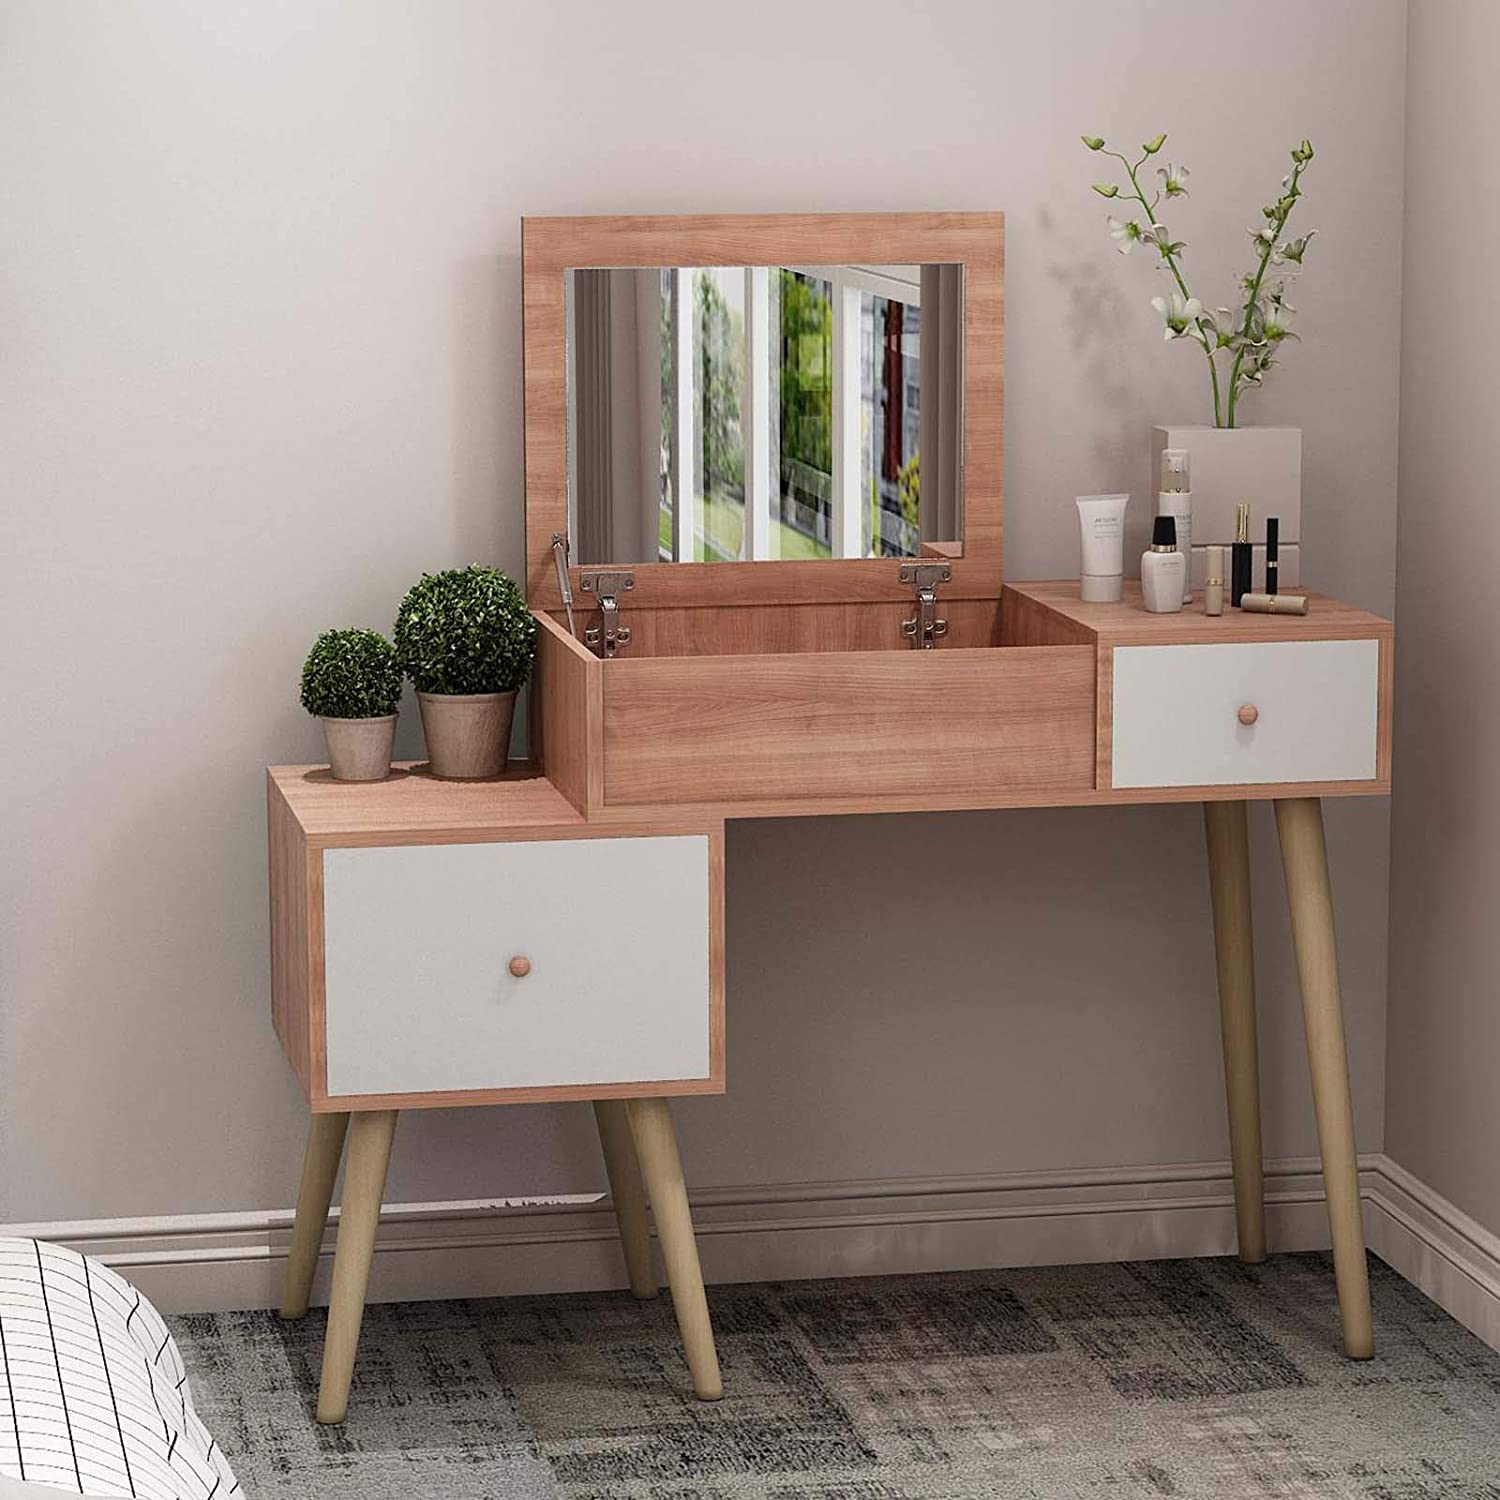 Wooden Vanity Makeup Desk with Mirror and Drawers Bedroom